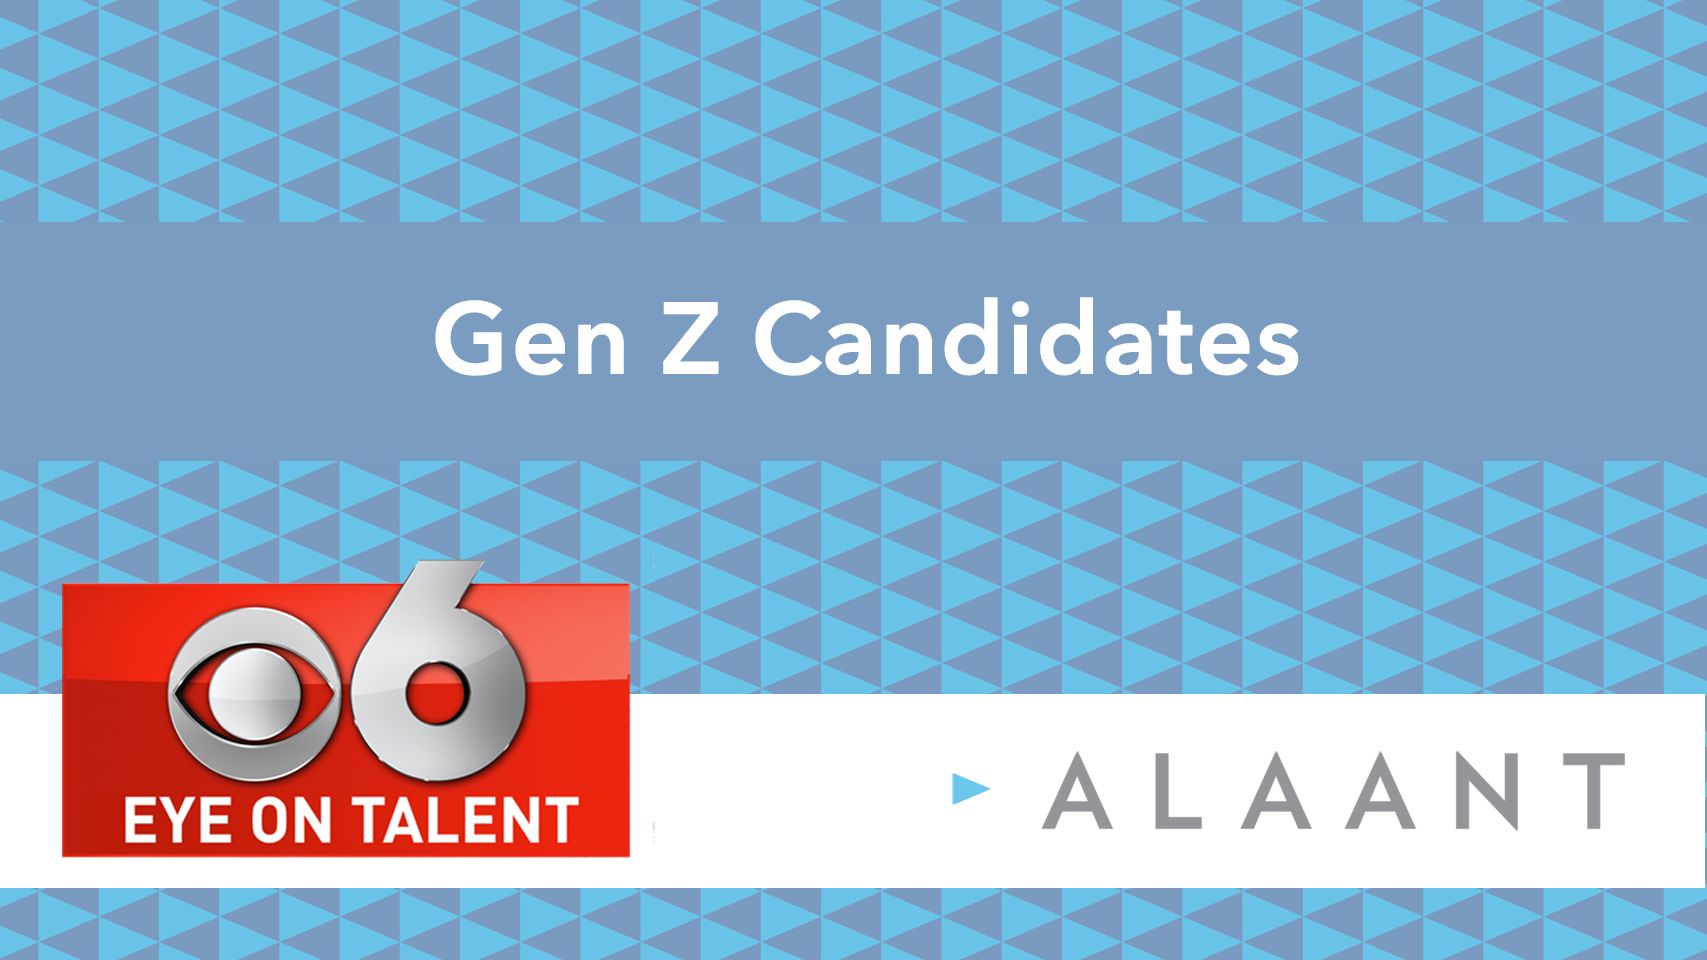 Alaant Eye on Talent Gen Z Candidates